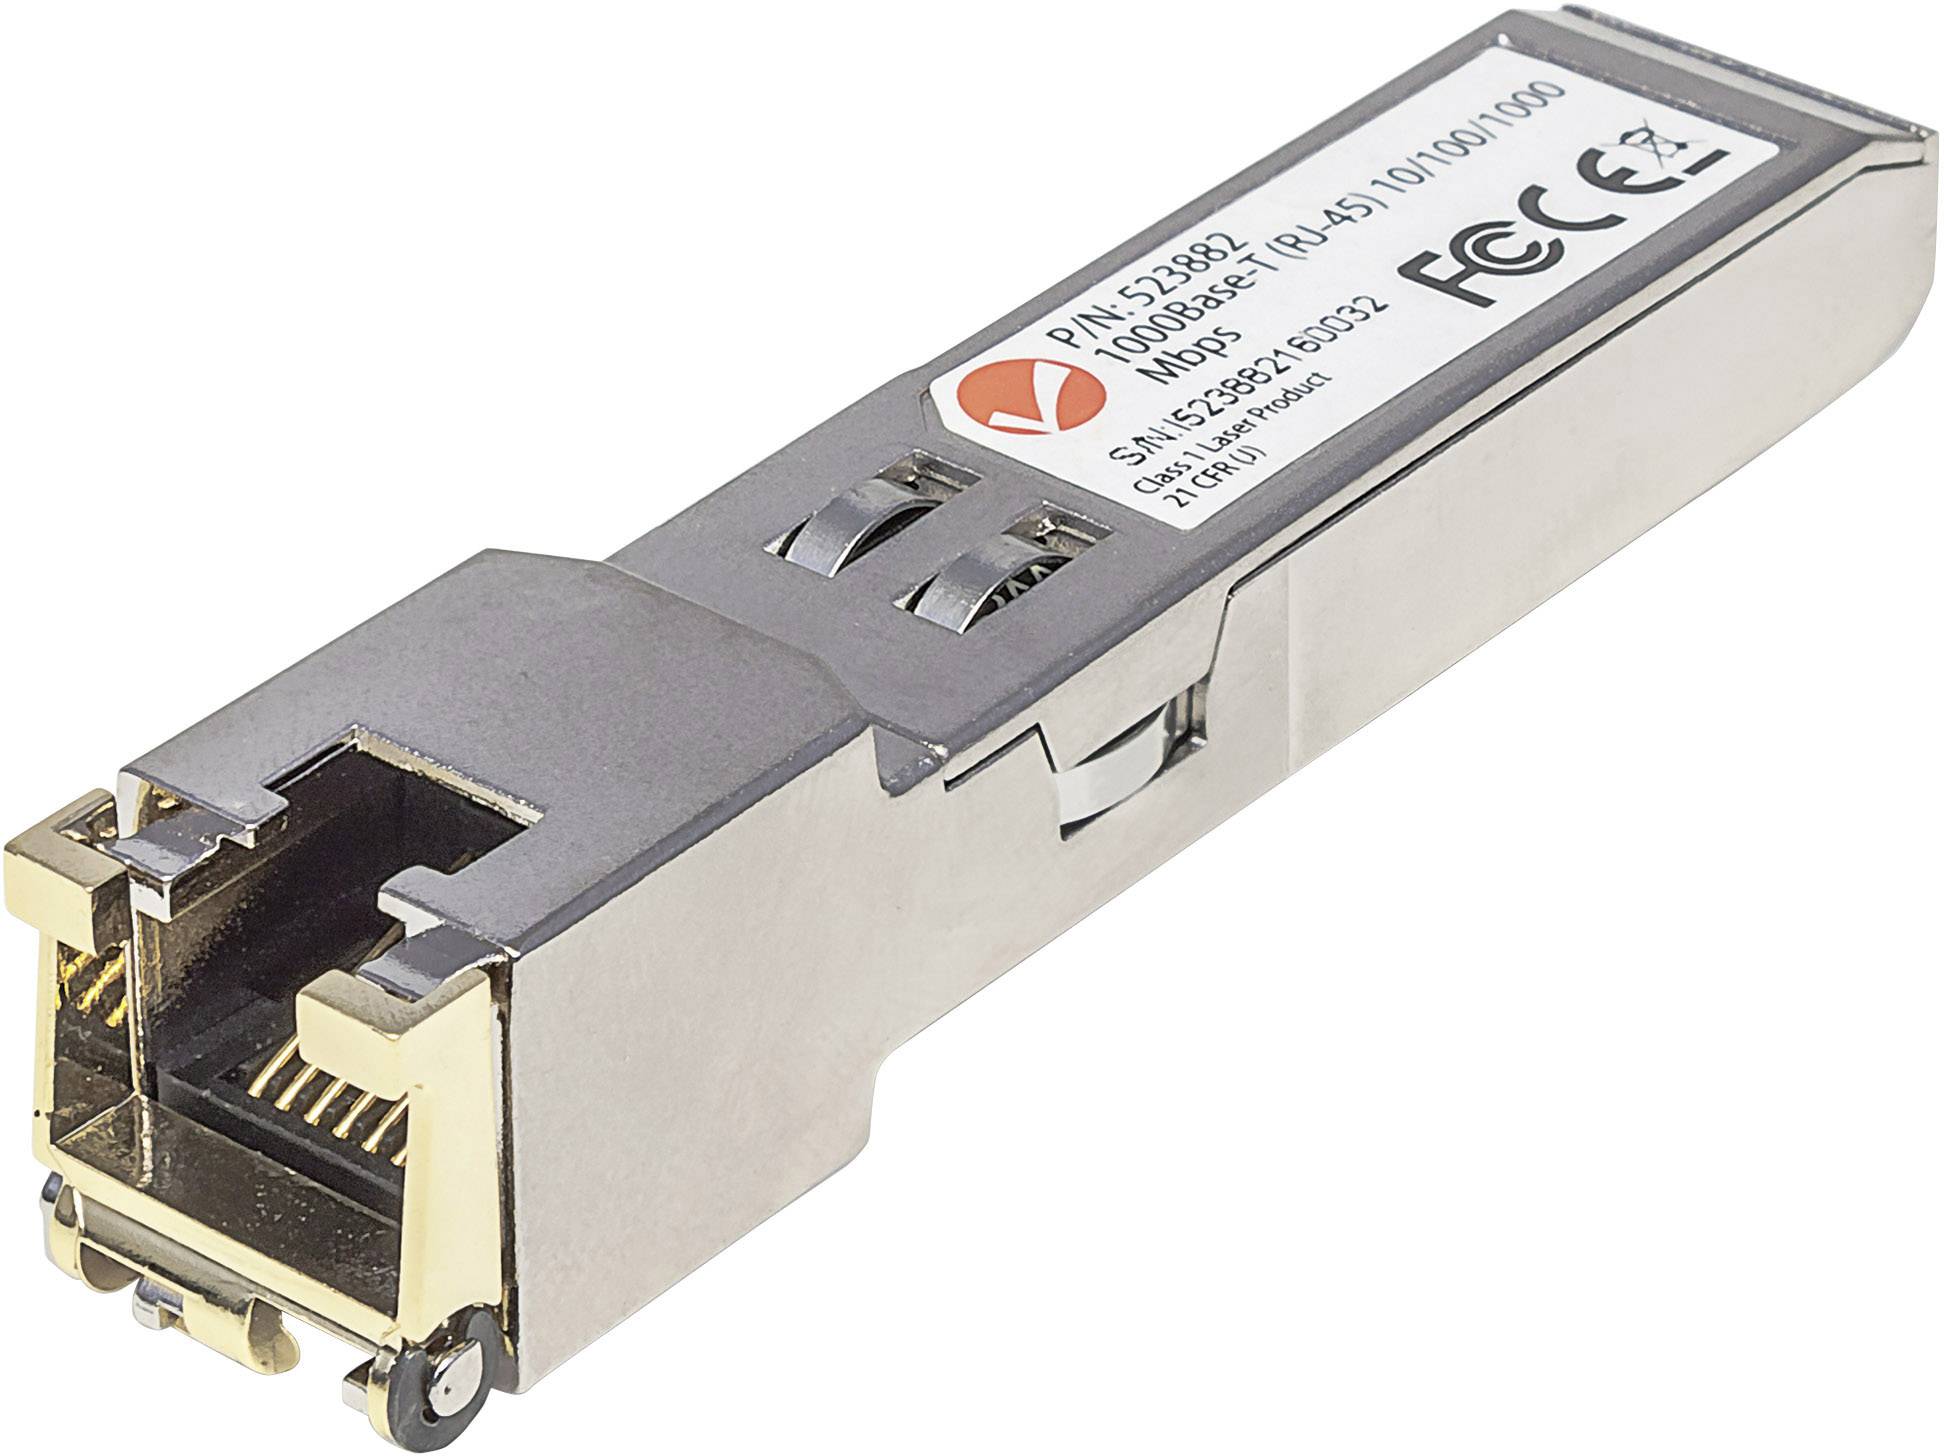 INTELLINET Gigabit SFP Mini-GBIC Transceiver 1000Base-T (RJ45) Single-Mode Port Reichweite bis zu 10